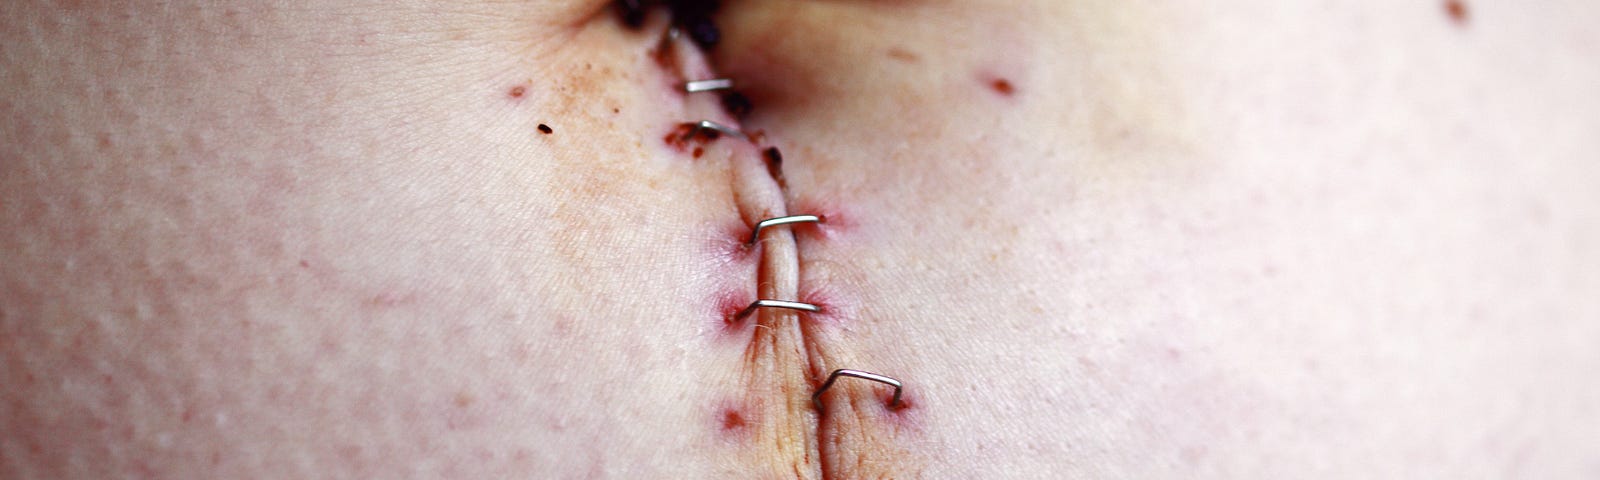 Post surgery stapled tummy scar